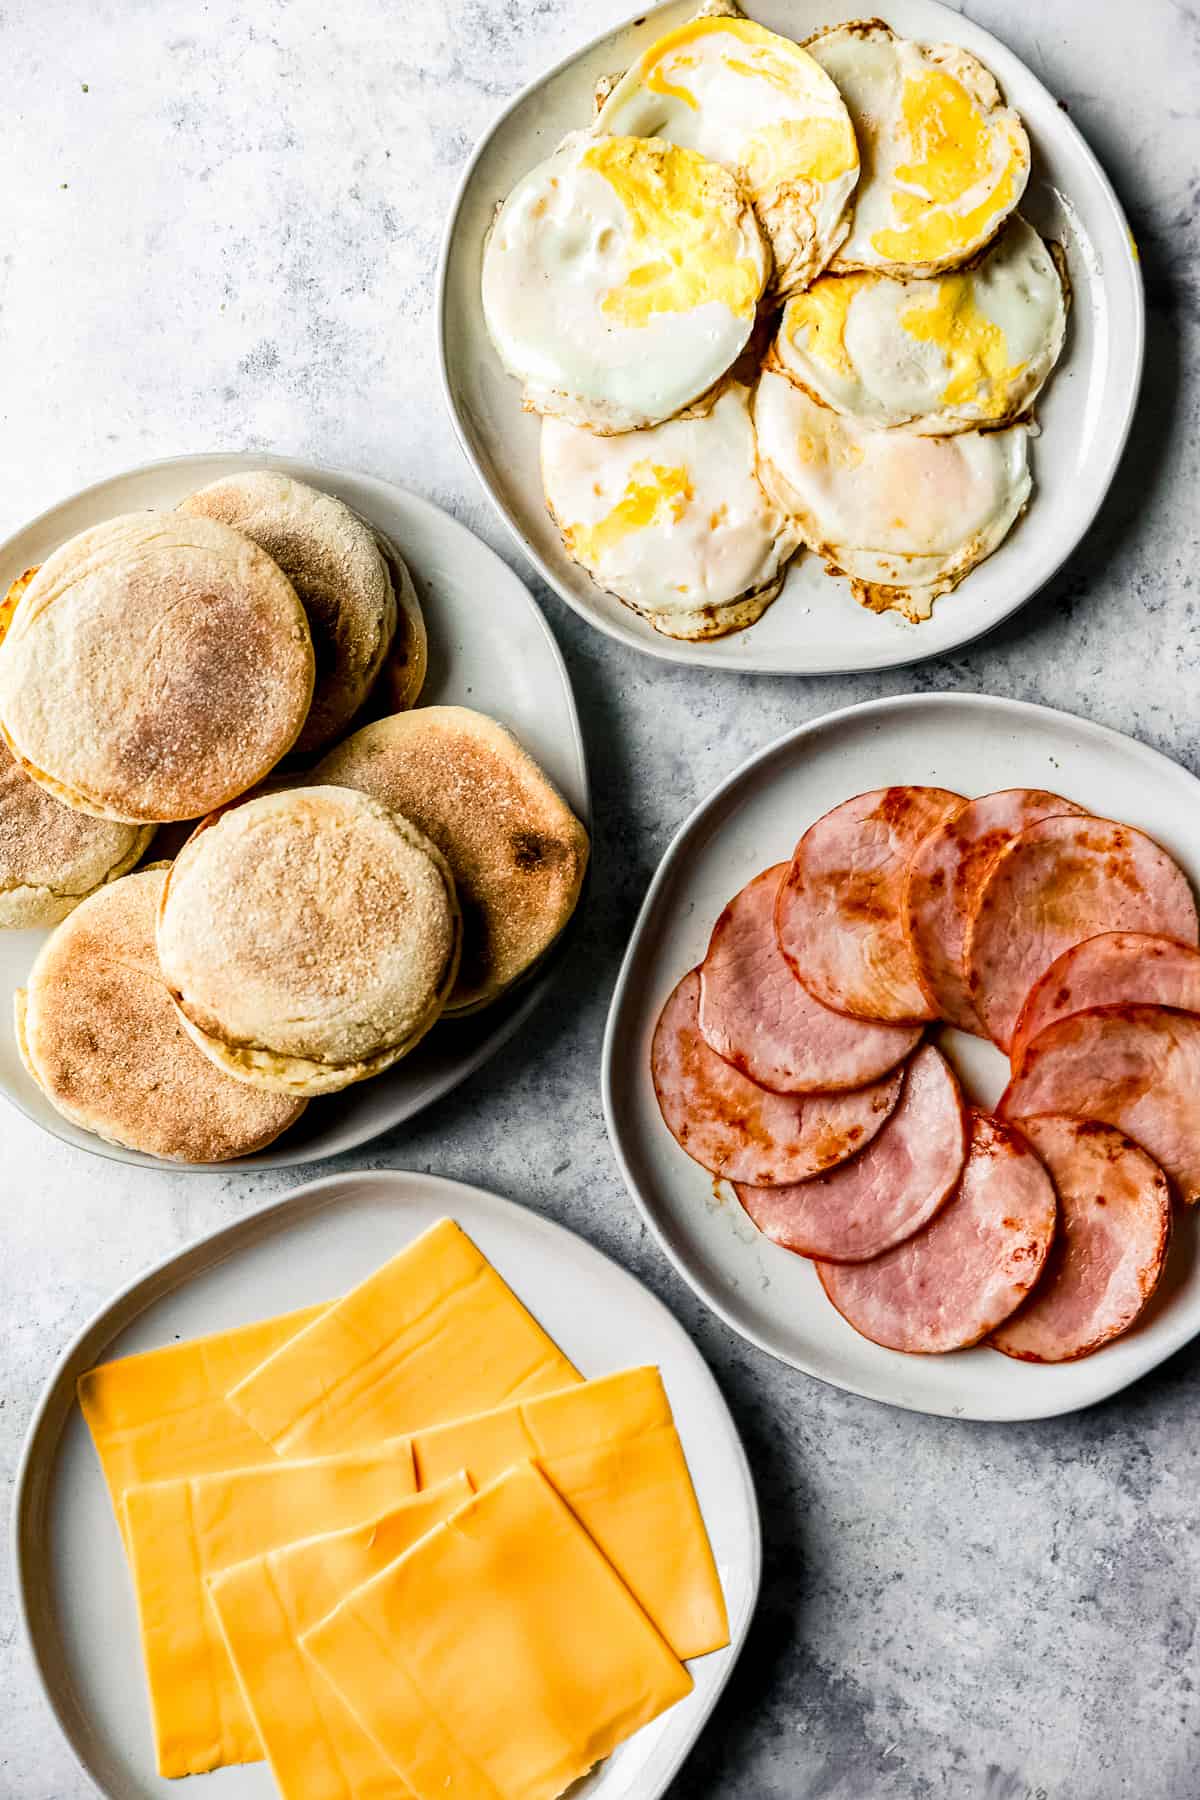 https://www.thecookierookie.com/wp-content/uploads/2021/10/homemade-egg-mcmuffin-recipe.jpg